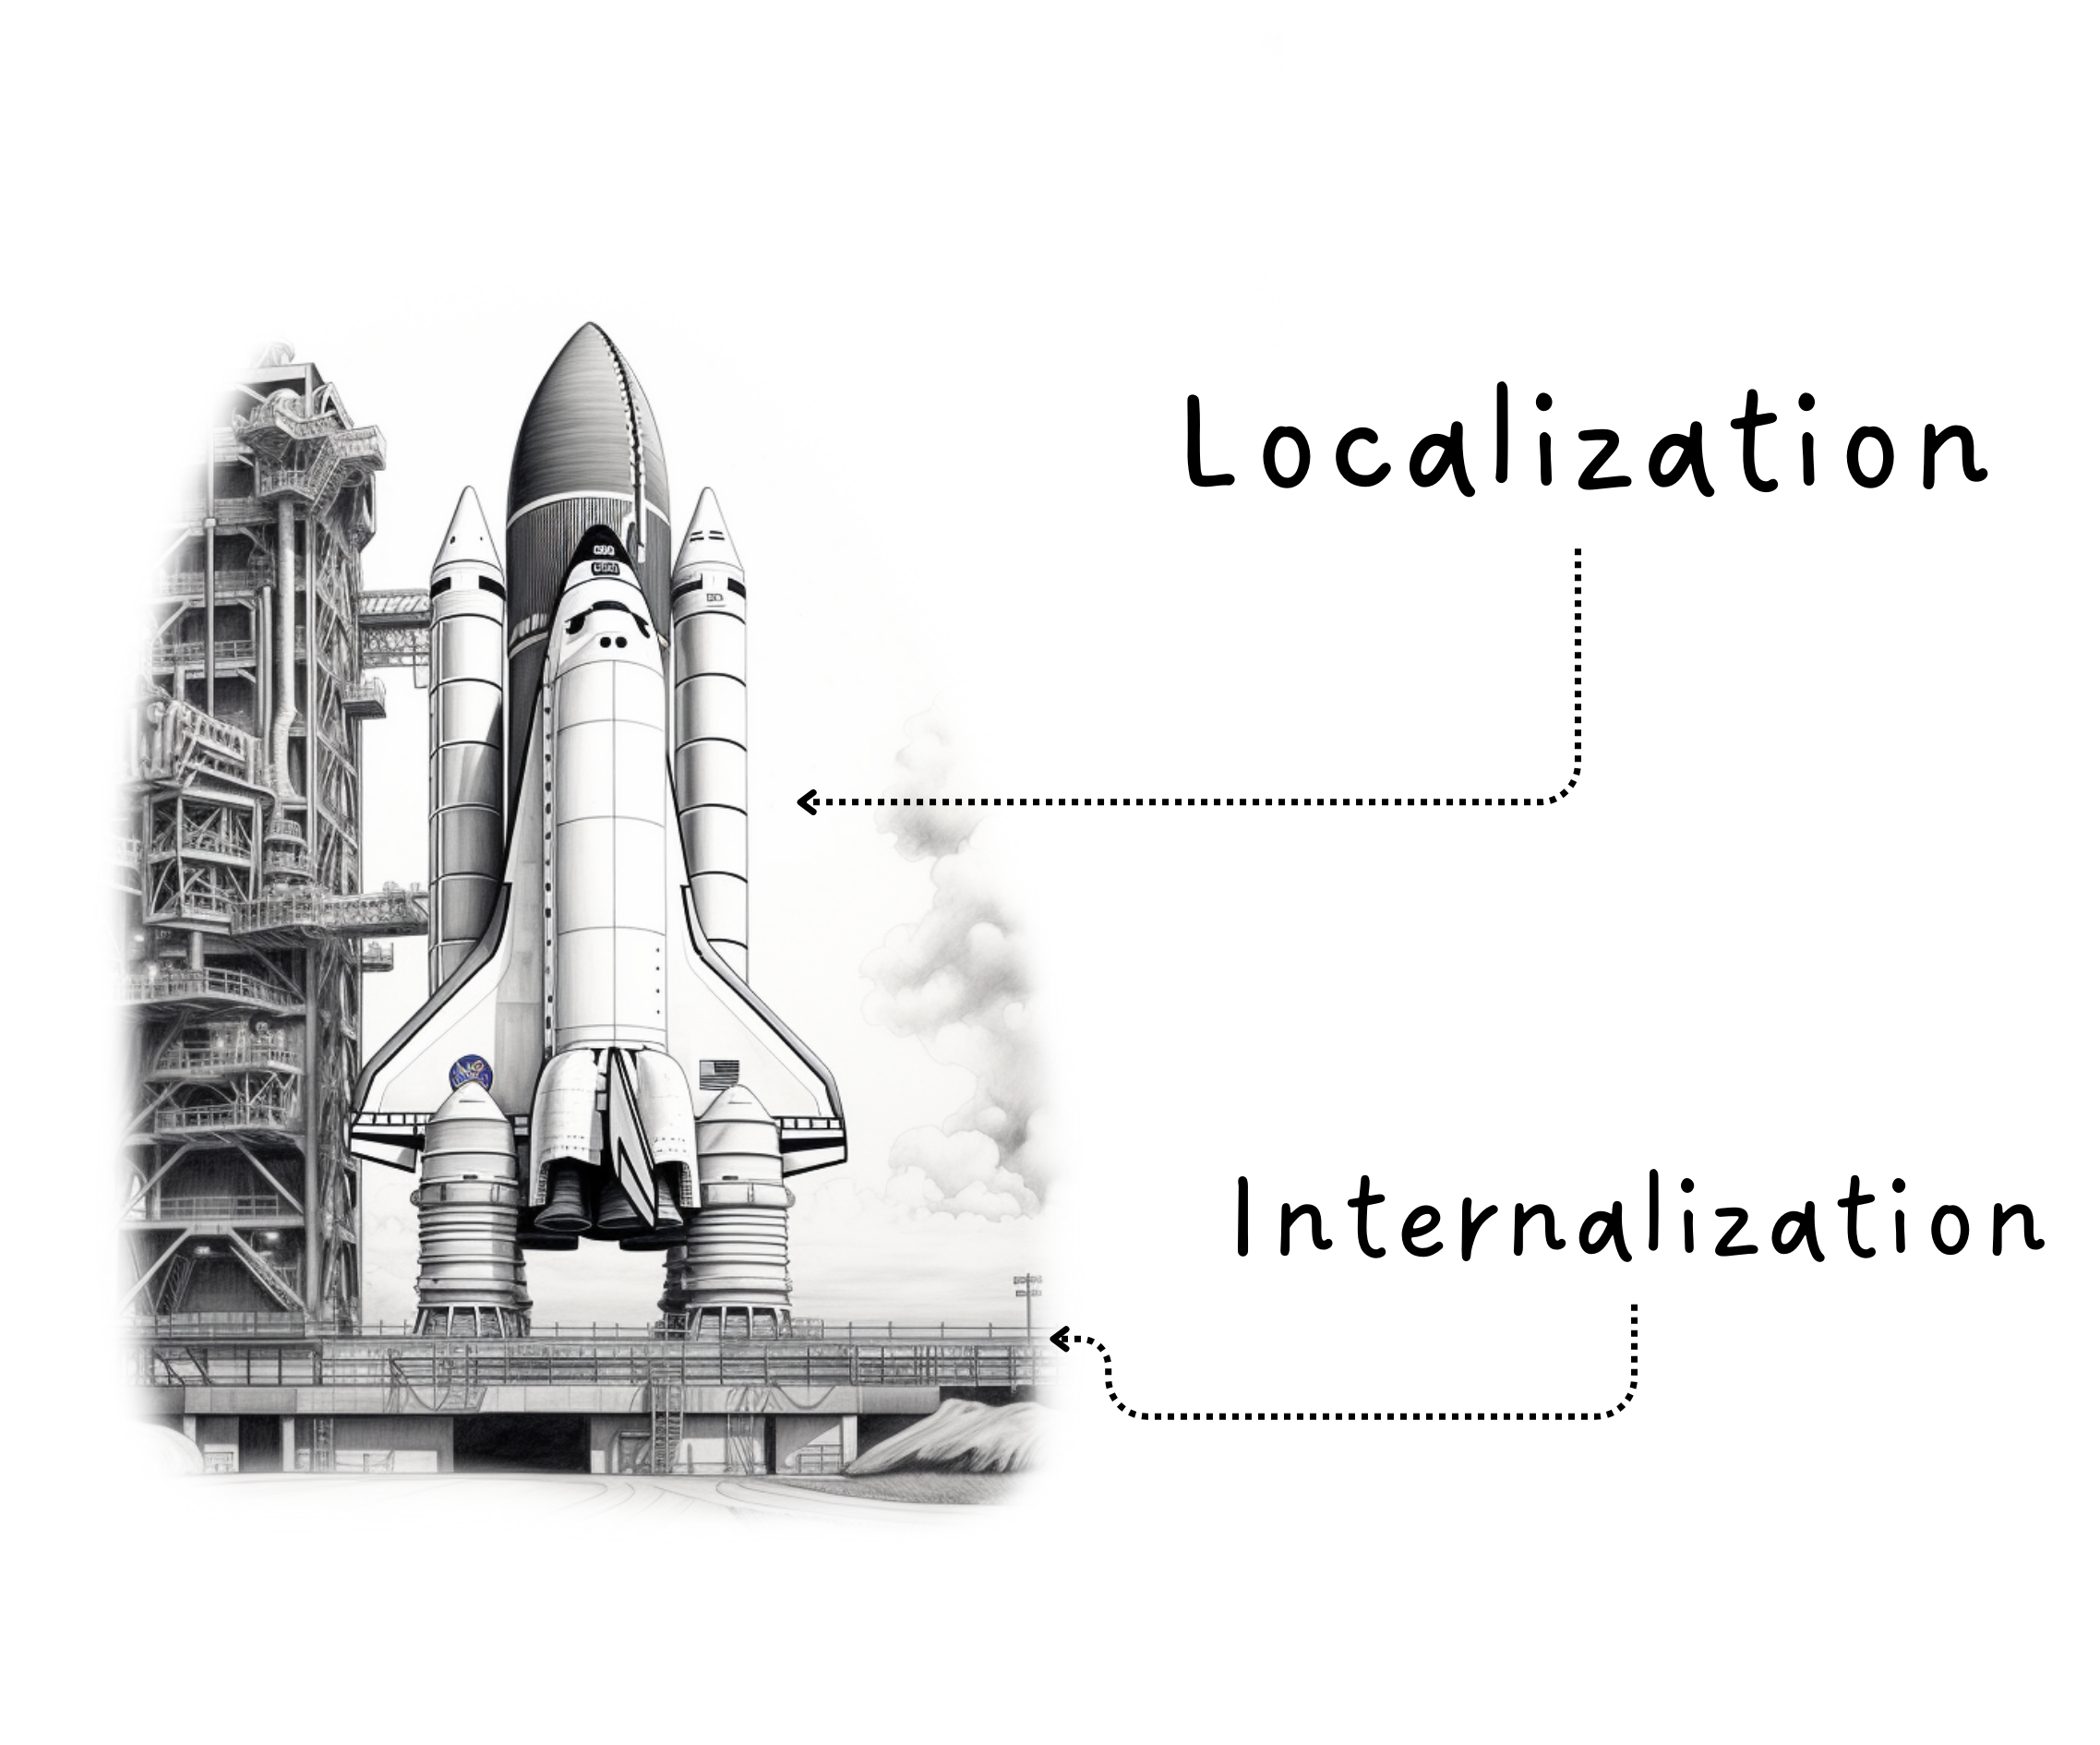 Internationalization is like a rocketship launchpad